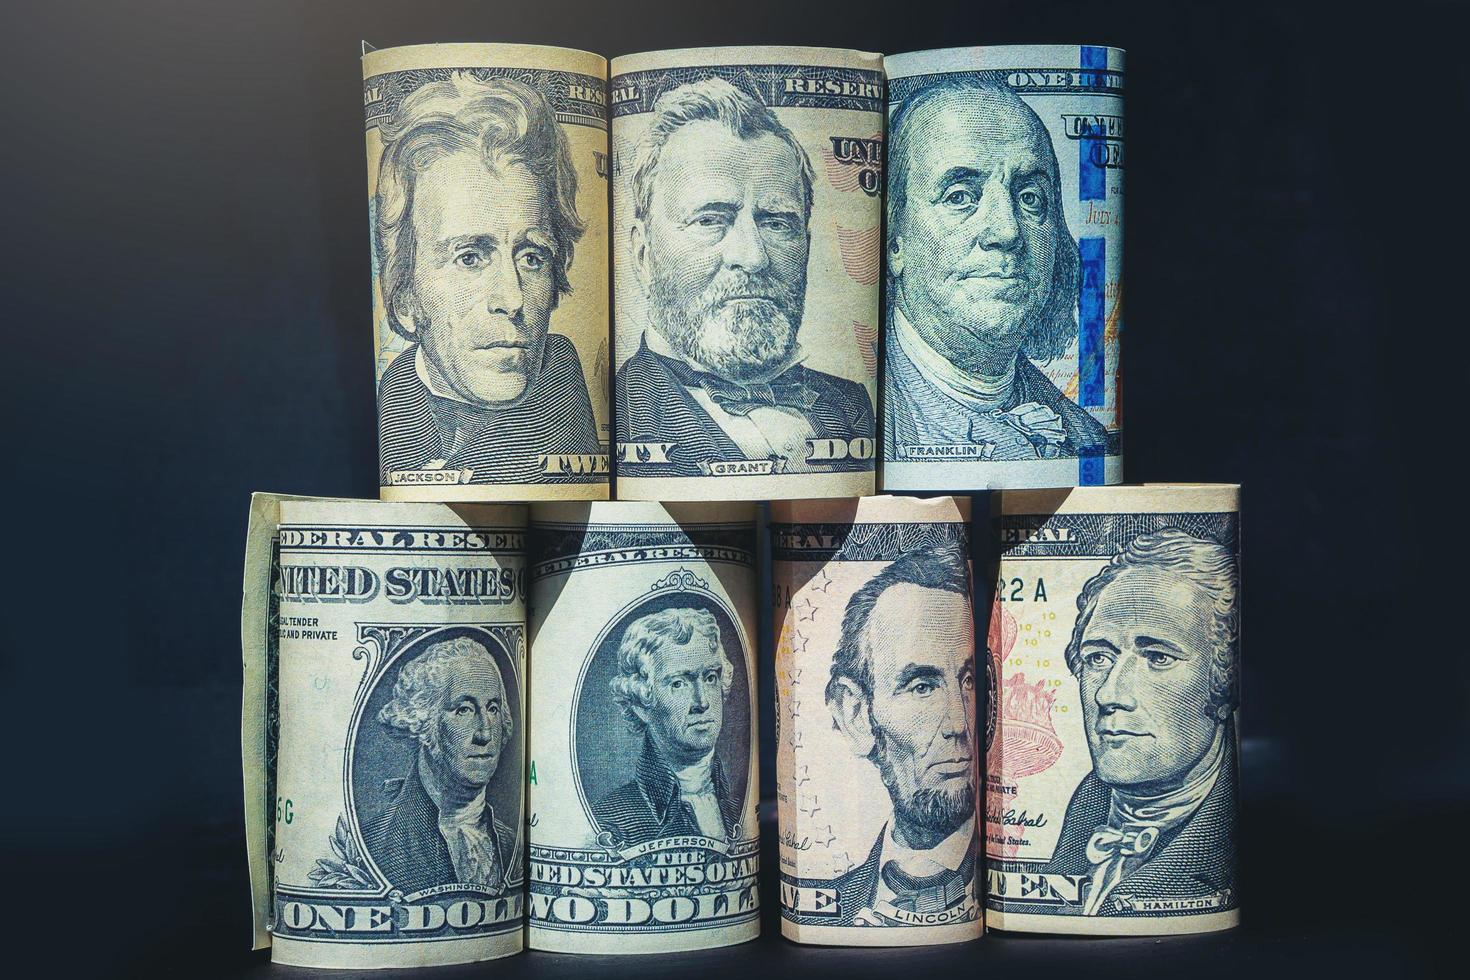 amerika presidenten op bankbiljetten geld stapel op donkere achtergrond. geselecteerde focus foto